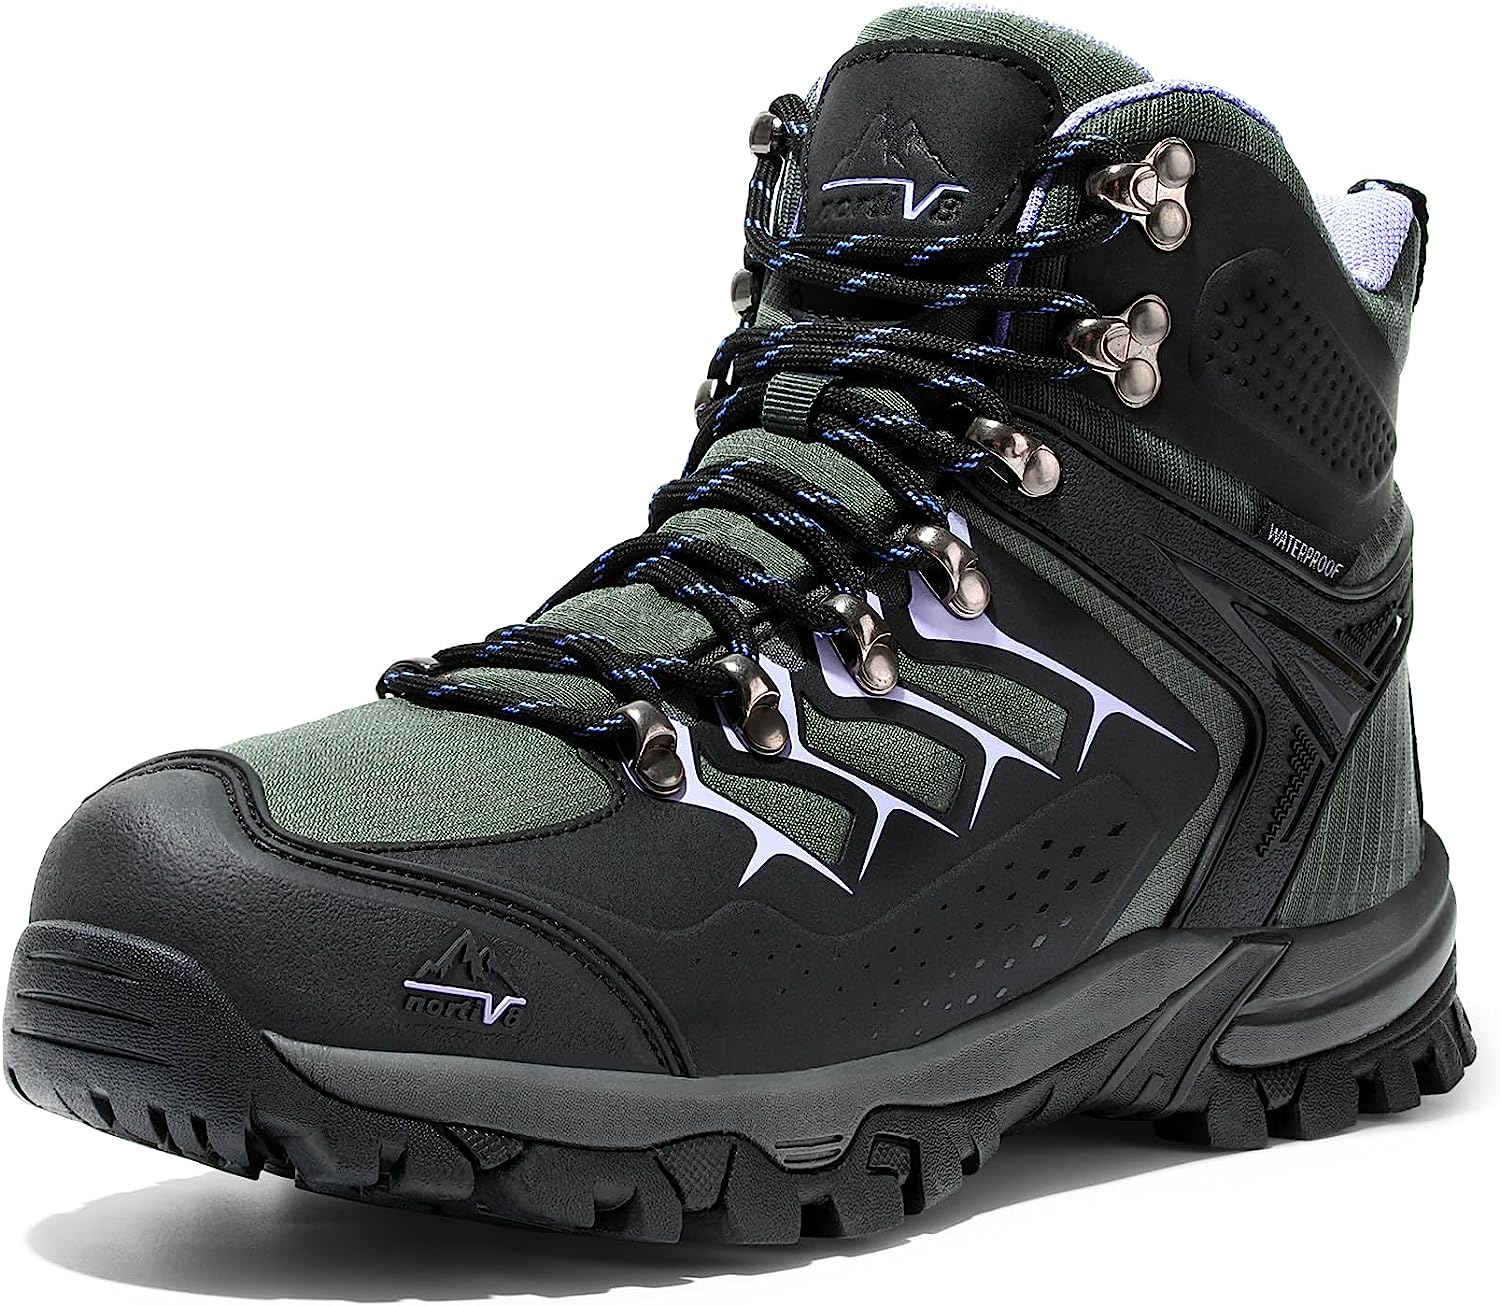 NORTIV 8 Women's Hiking Boots Waterproof Backpacking [...]